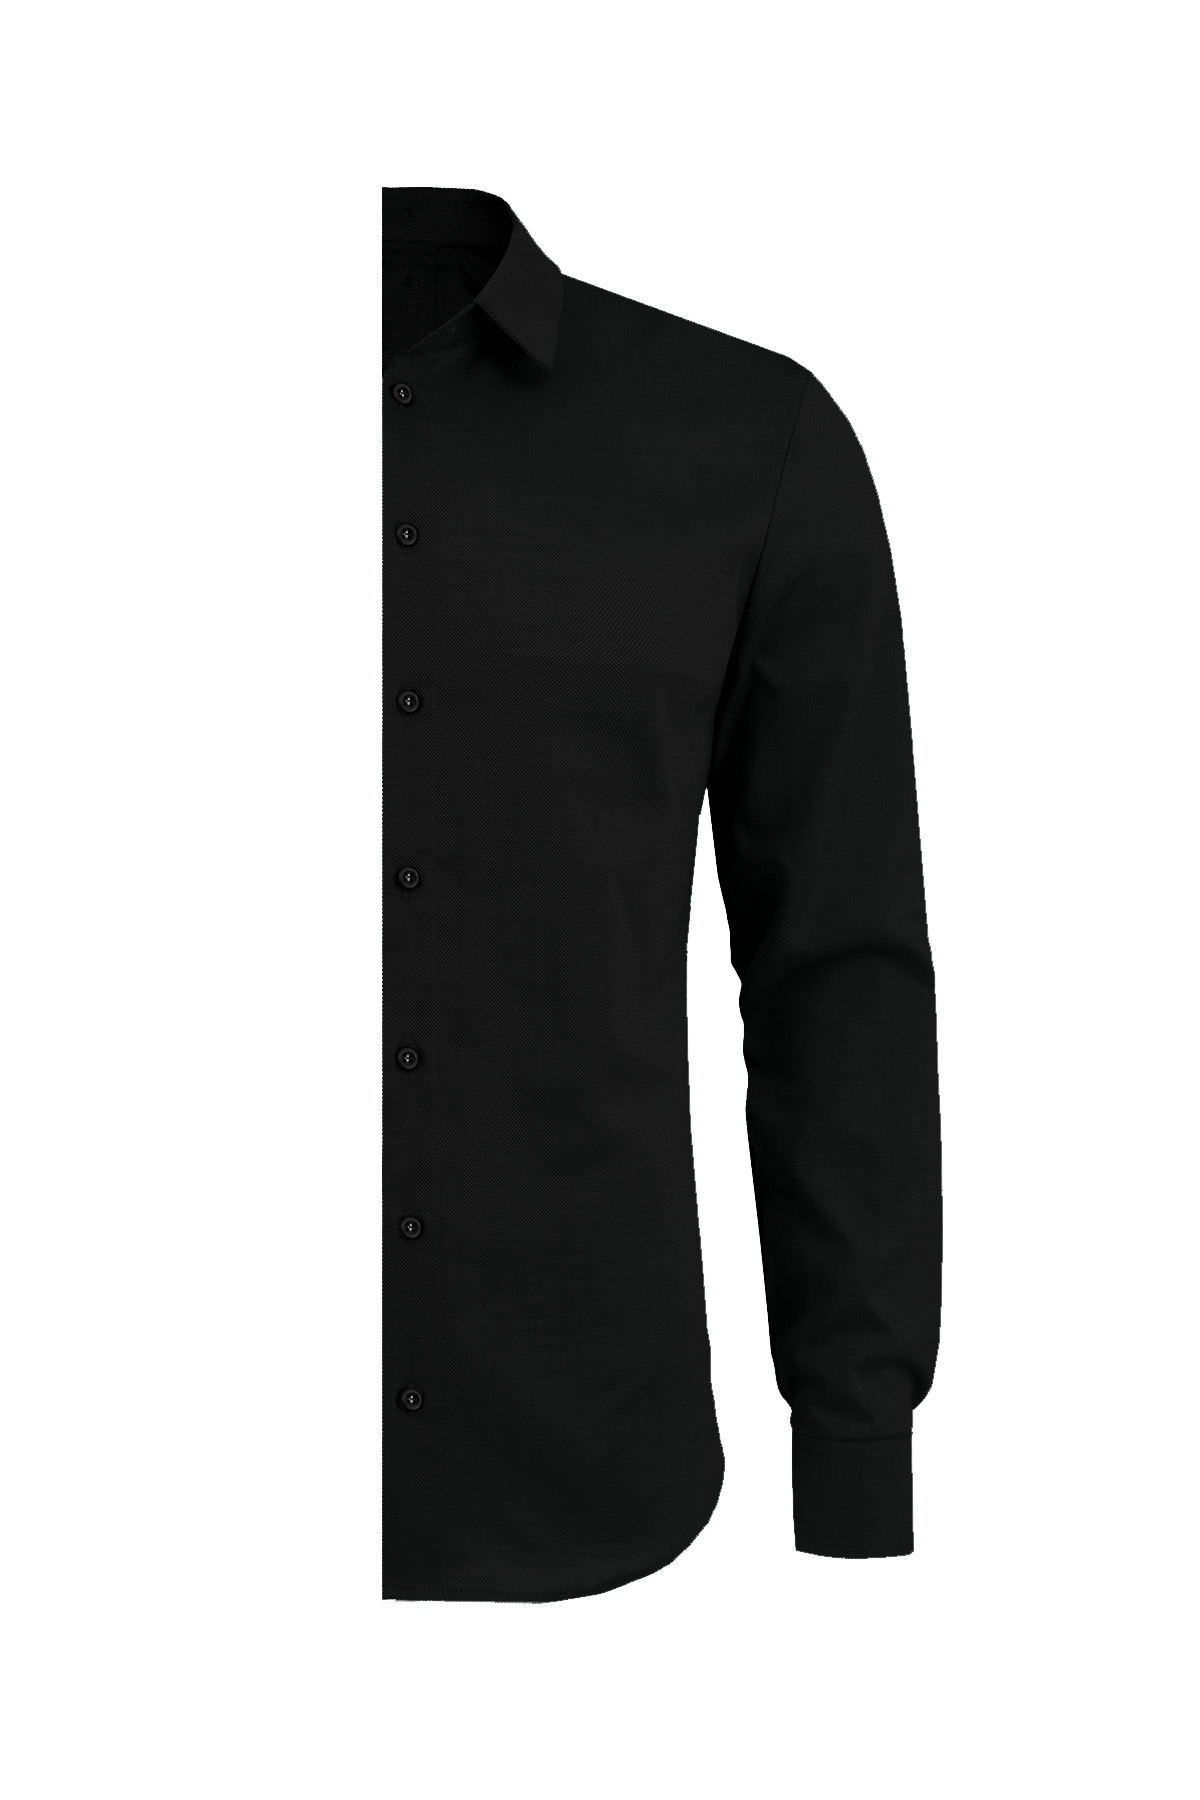 Koszula czarna slim - lewa